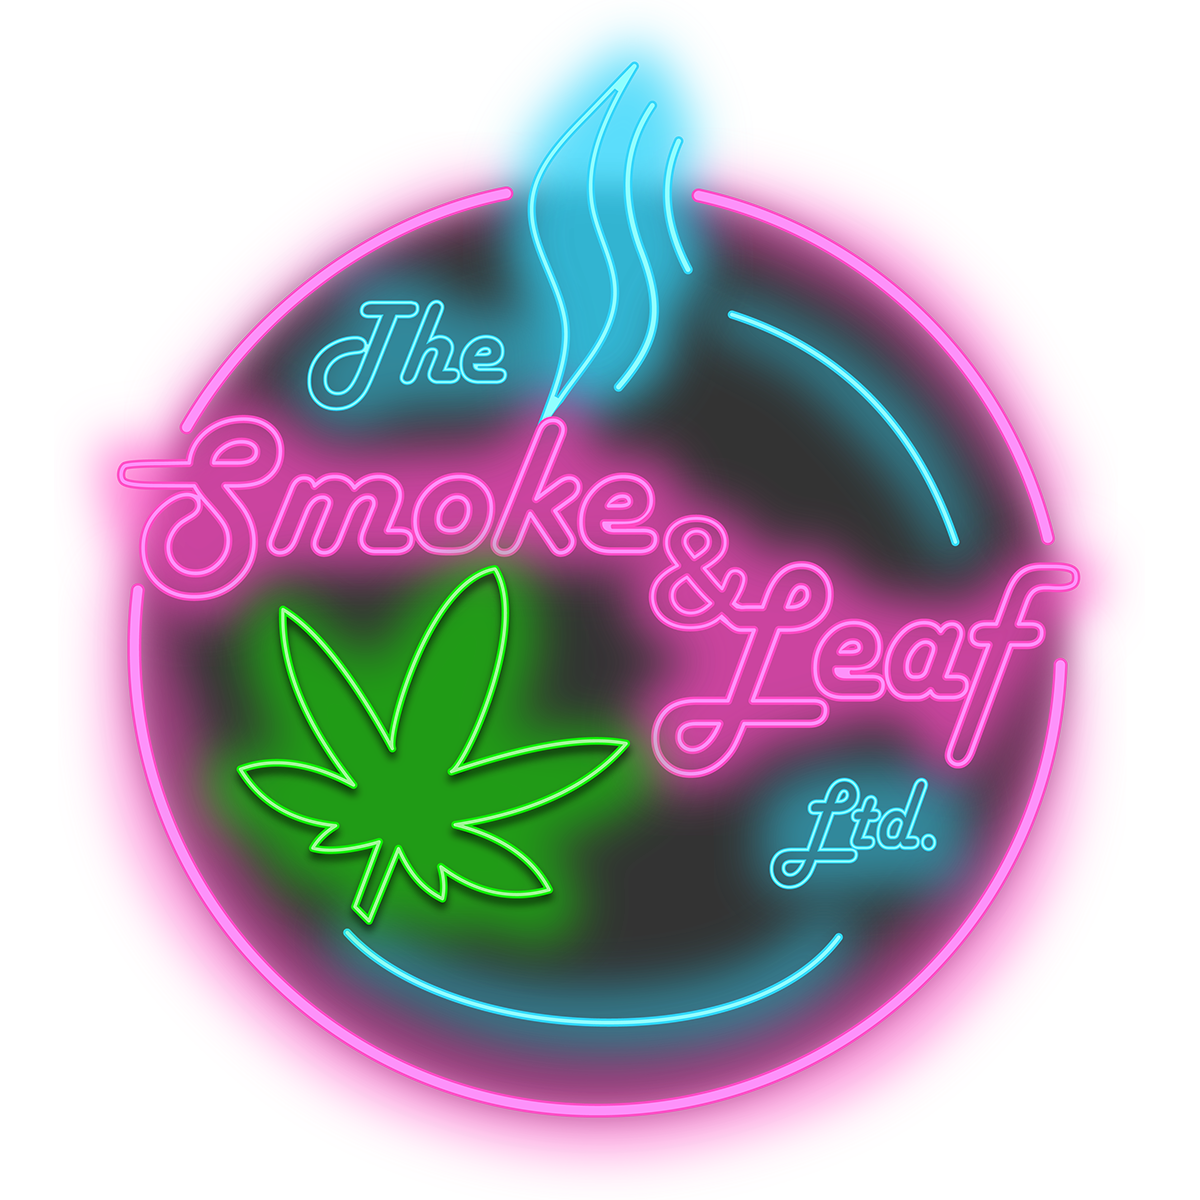 The Smoke and Leaf Ltd. - Napanee Dispensary logo